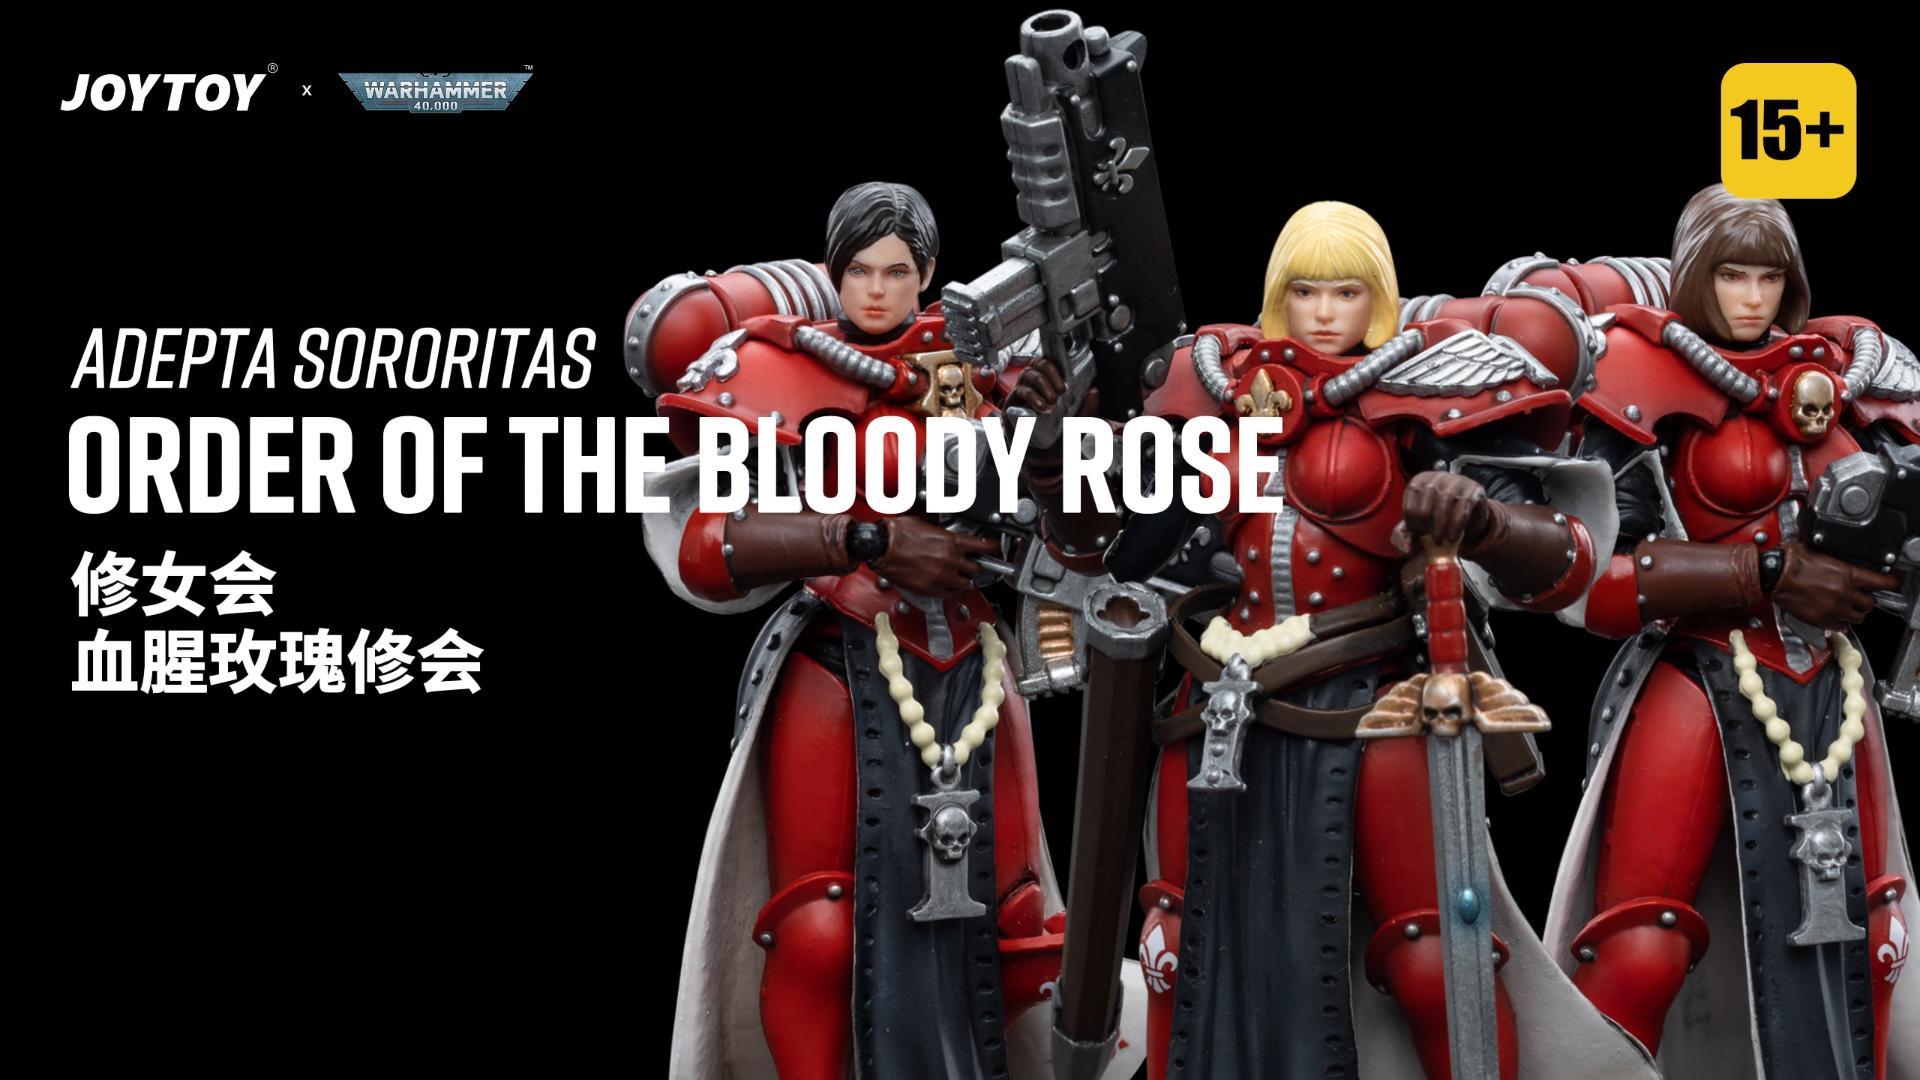 JoyToy Warhammer 40K Adepta Sororitas Battle Sisters Order of the